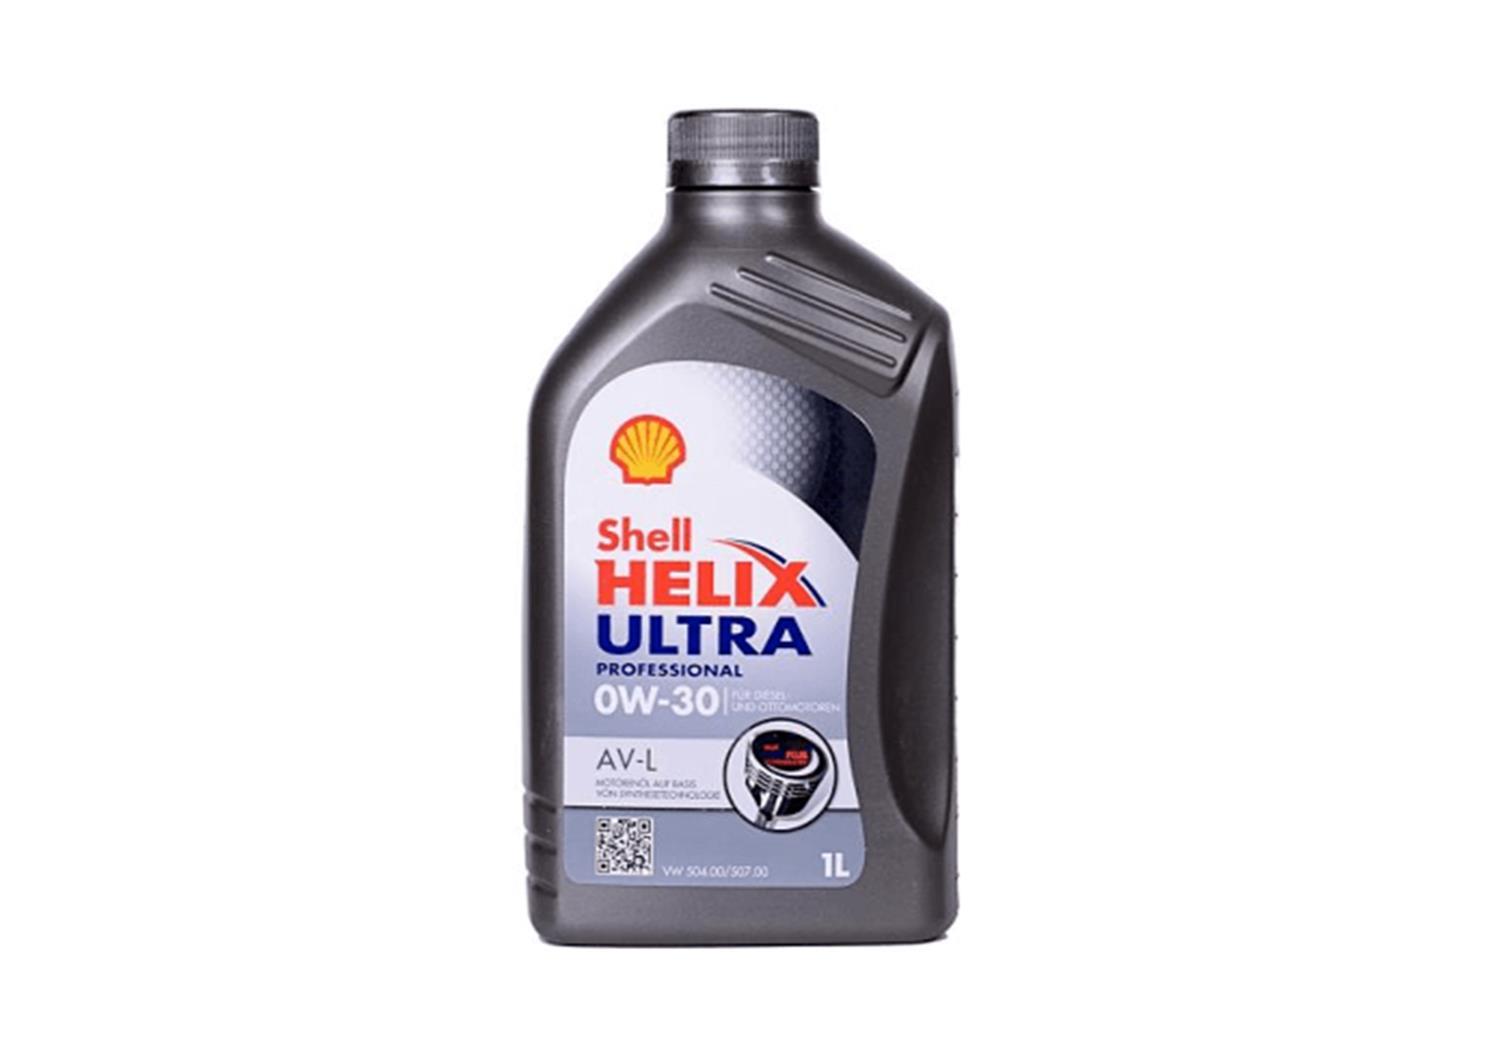 Helix ultra professional av. Shell Helix Ultra 10w60 Racing. Helix Ultra 5w-30 1л. Shell Helix Ultra professional AG 5w-30 1l. Shell Helix Ultra 5w30 1л 550046267.